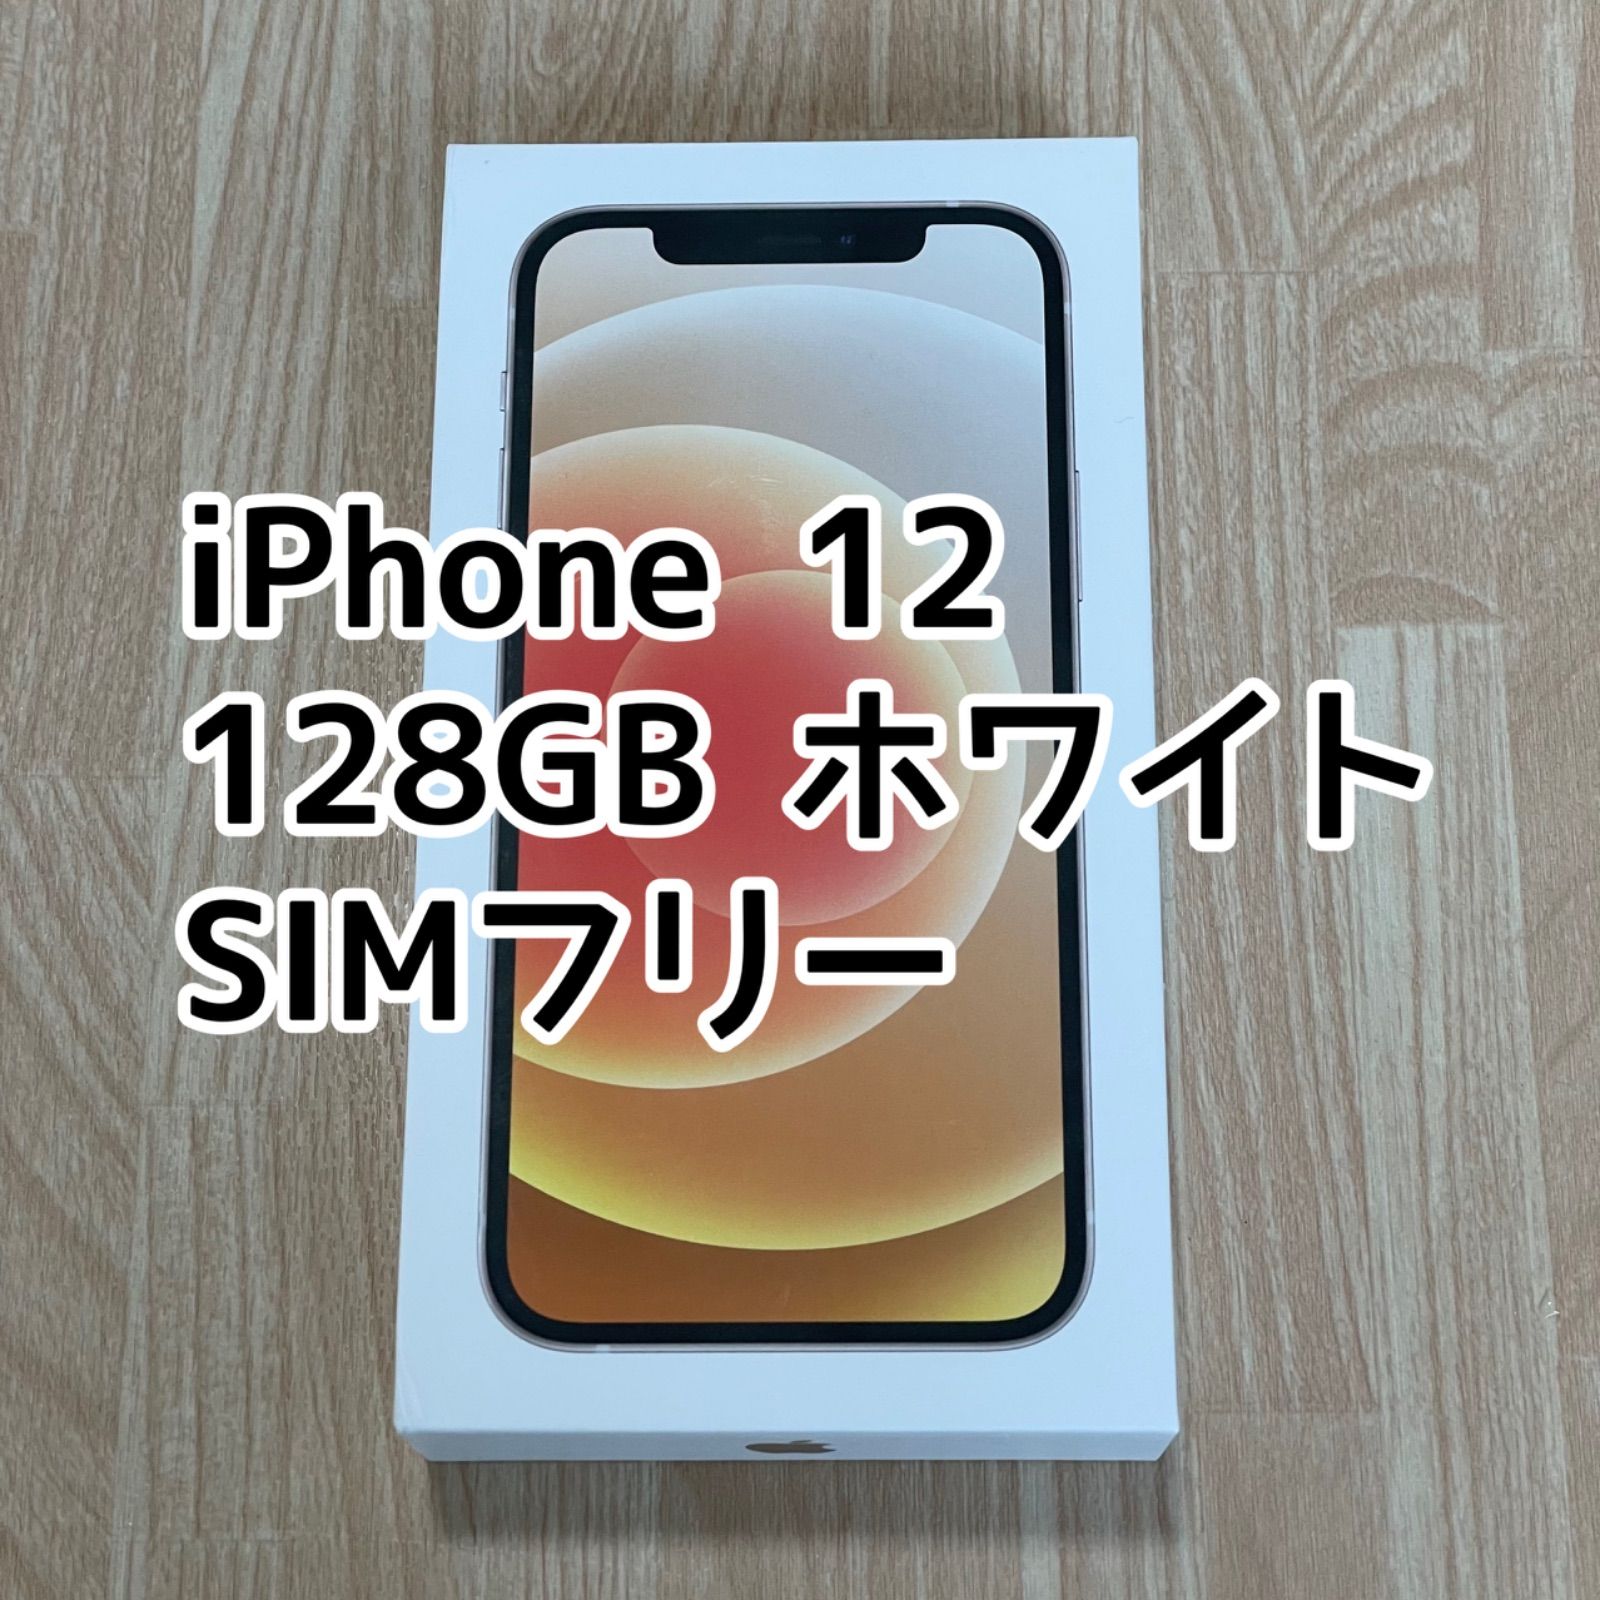 iPhone 12 ホワイト 128GB SIMフリー - メルカリ